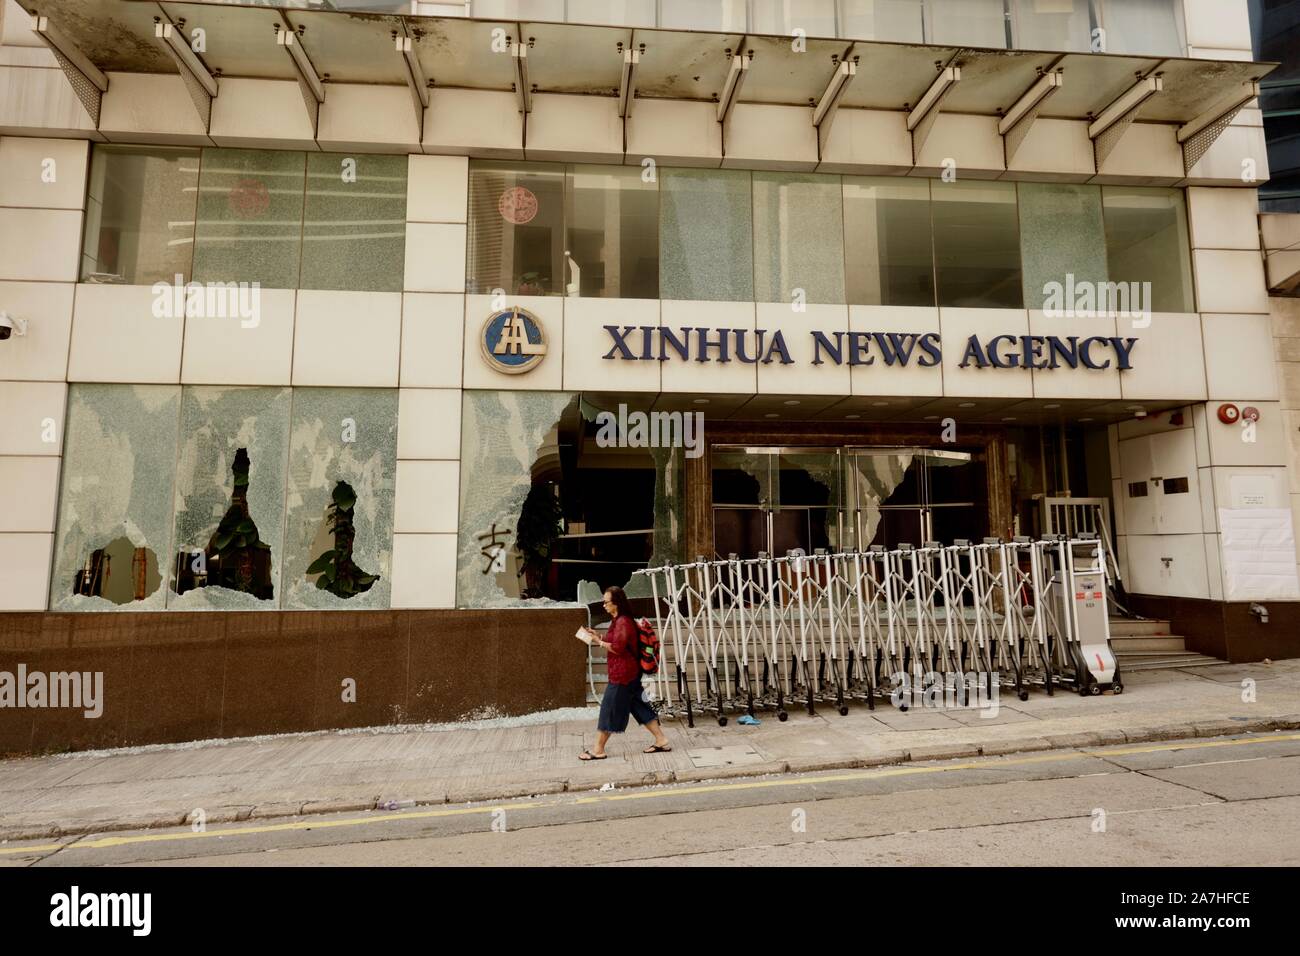 Agency xinhua news Xinhua News